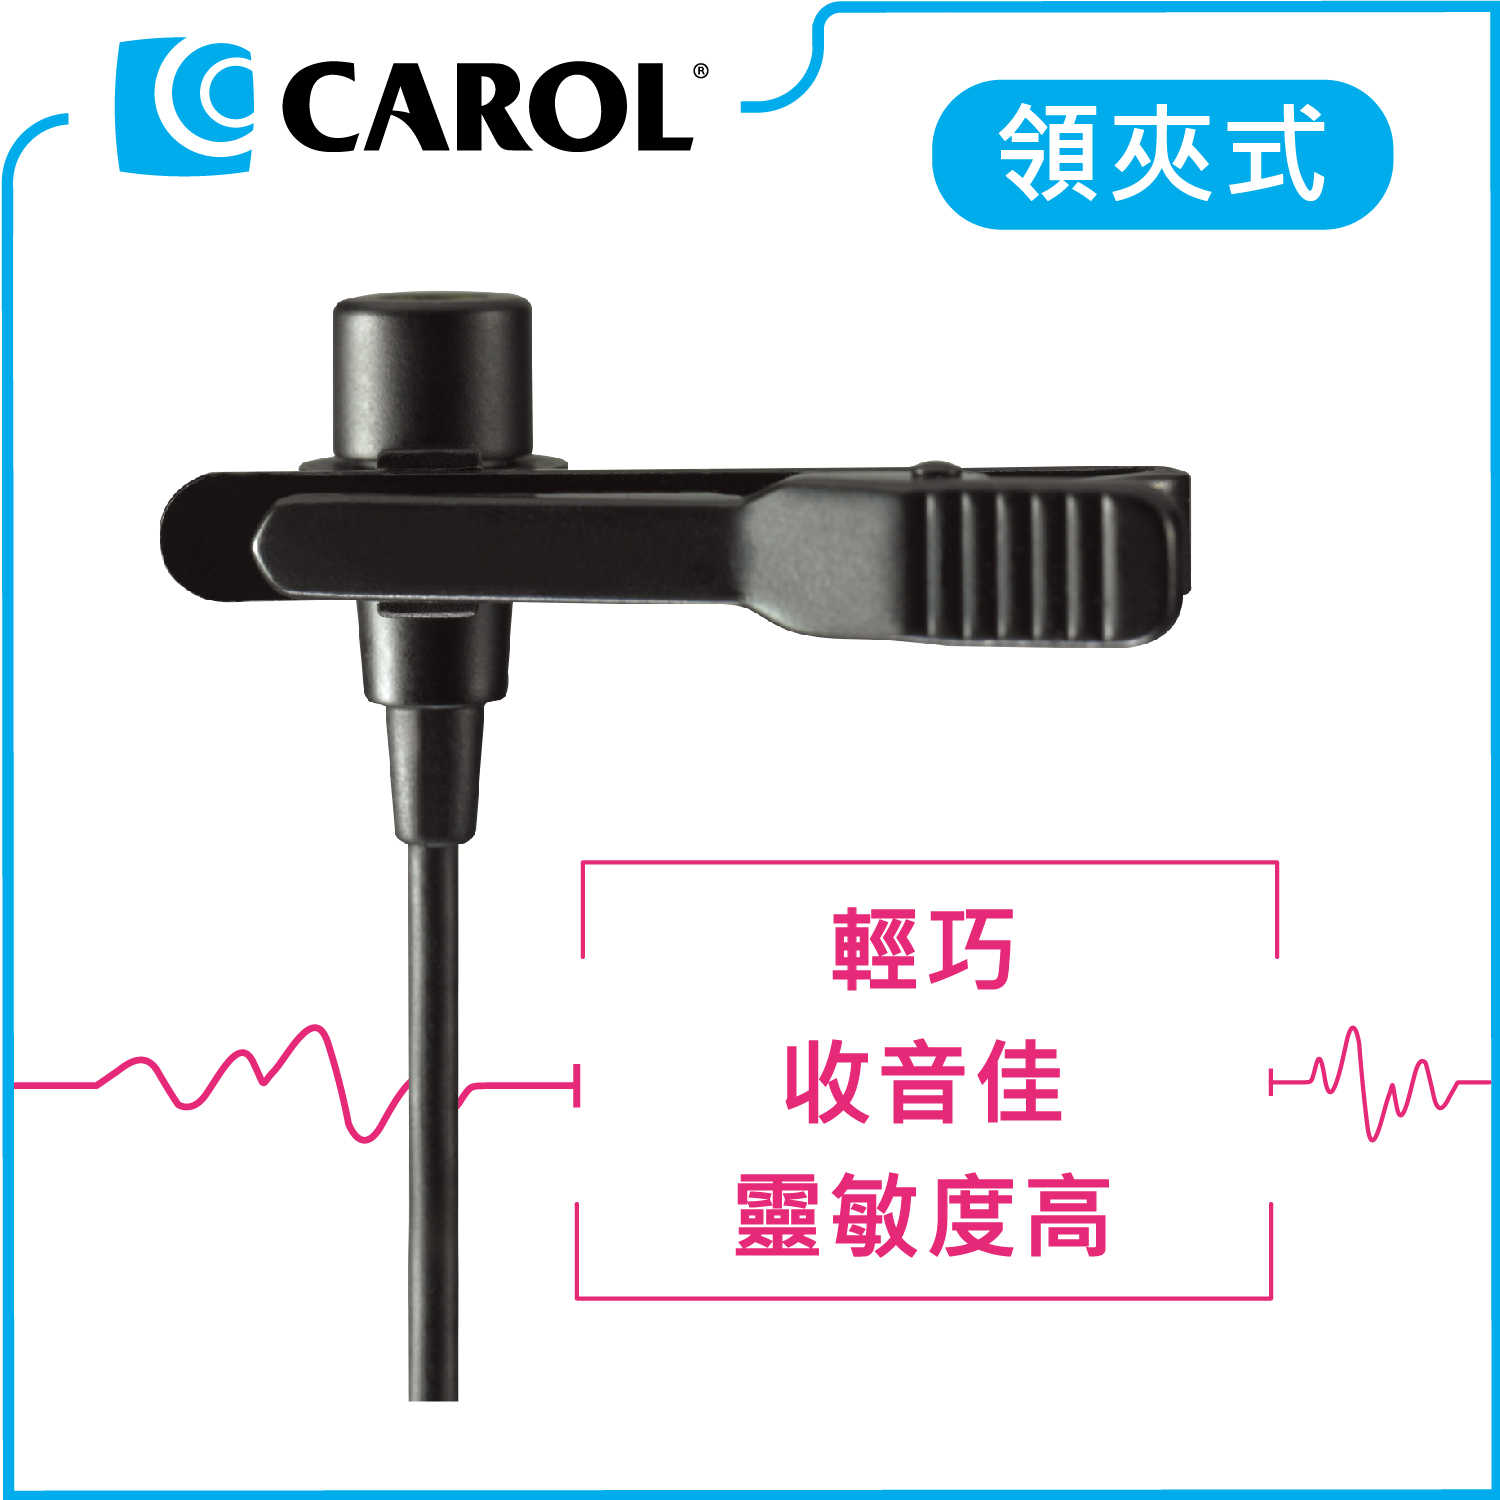 【CAROL】領夾式麥克風 MDM-863 – 輕巧、收音佳、靈敏度高、演講/教學適用